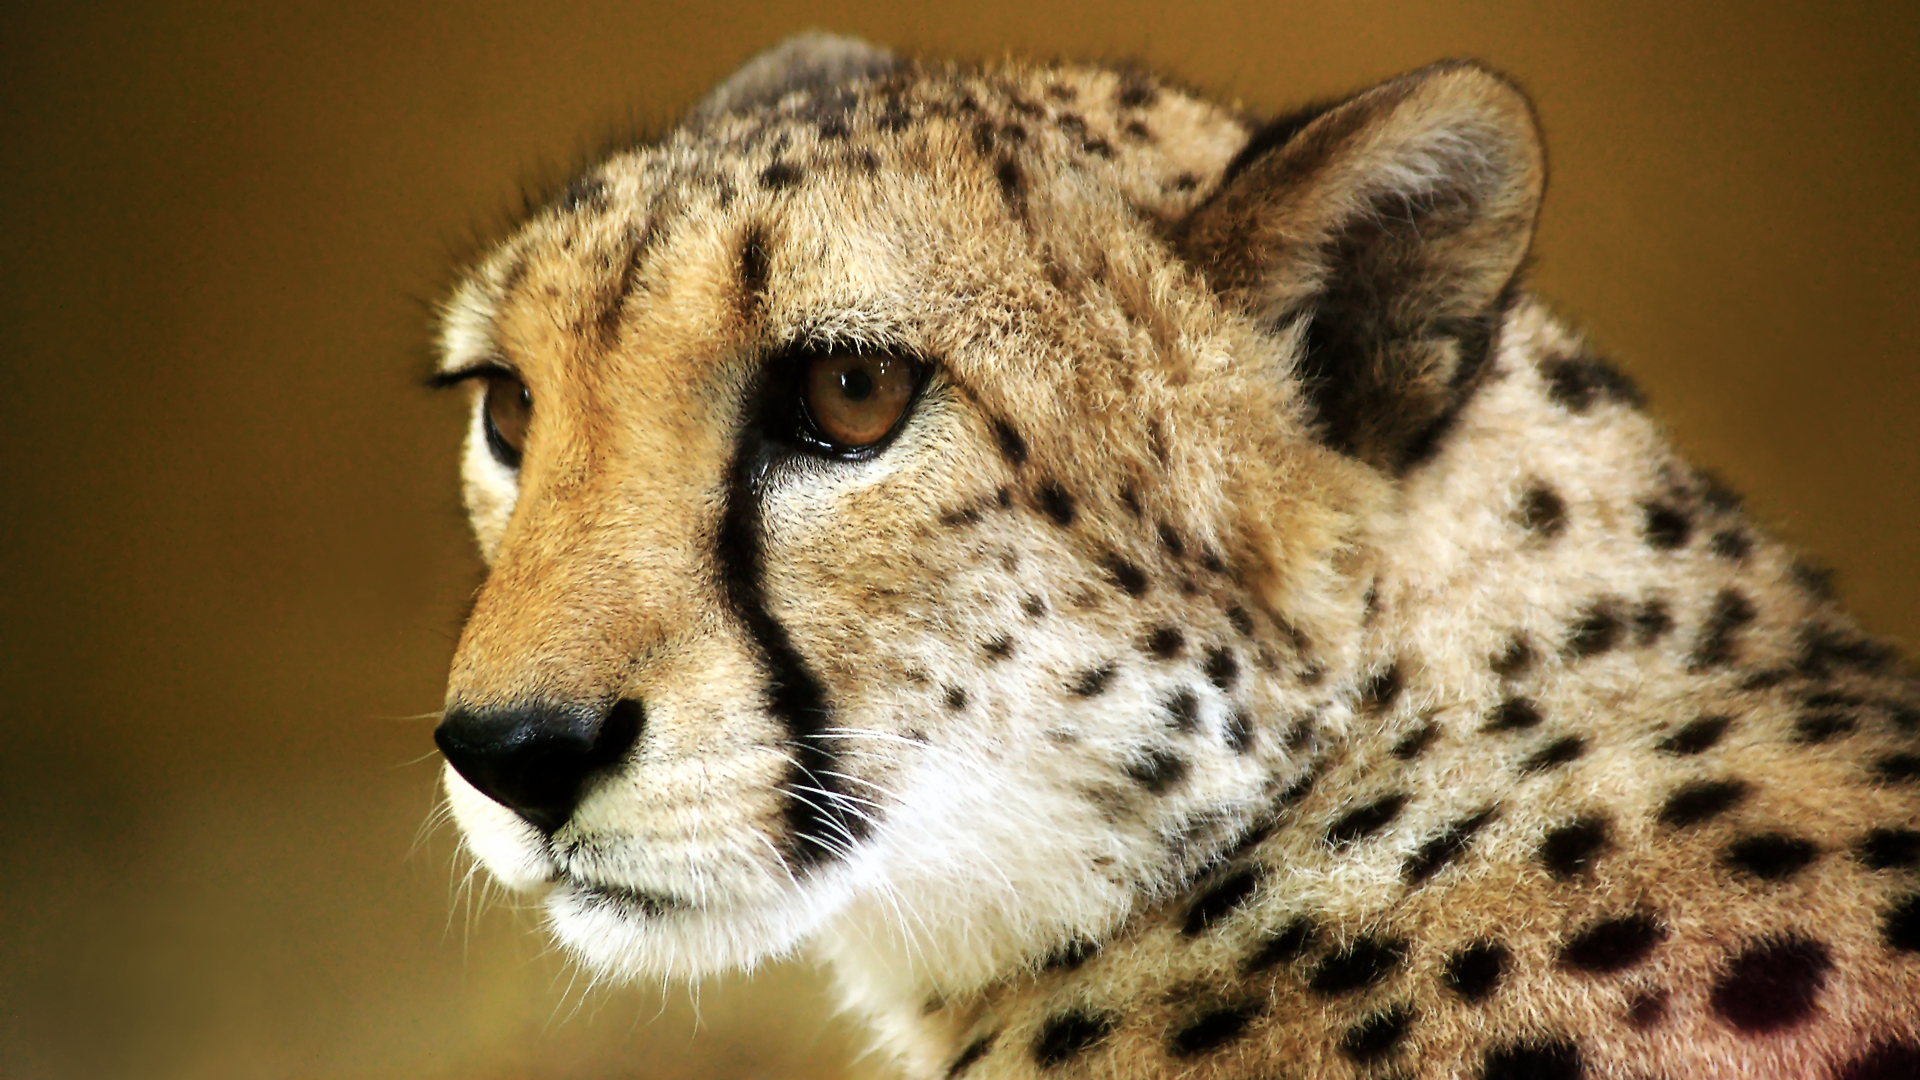 Cheetah wallpapers HD free download.